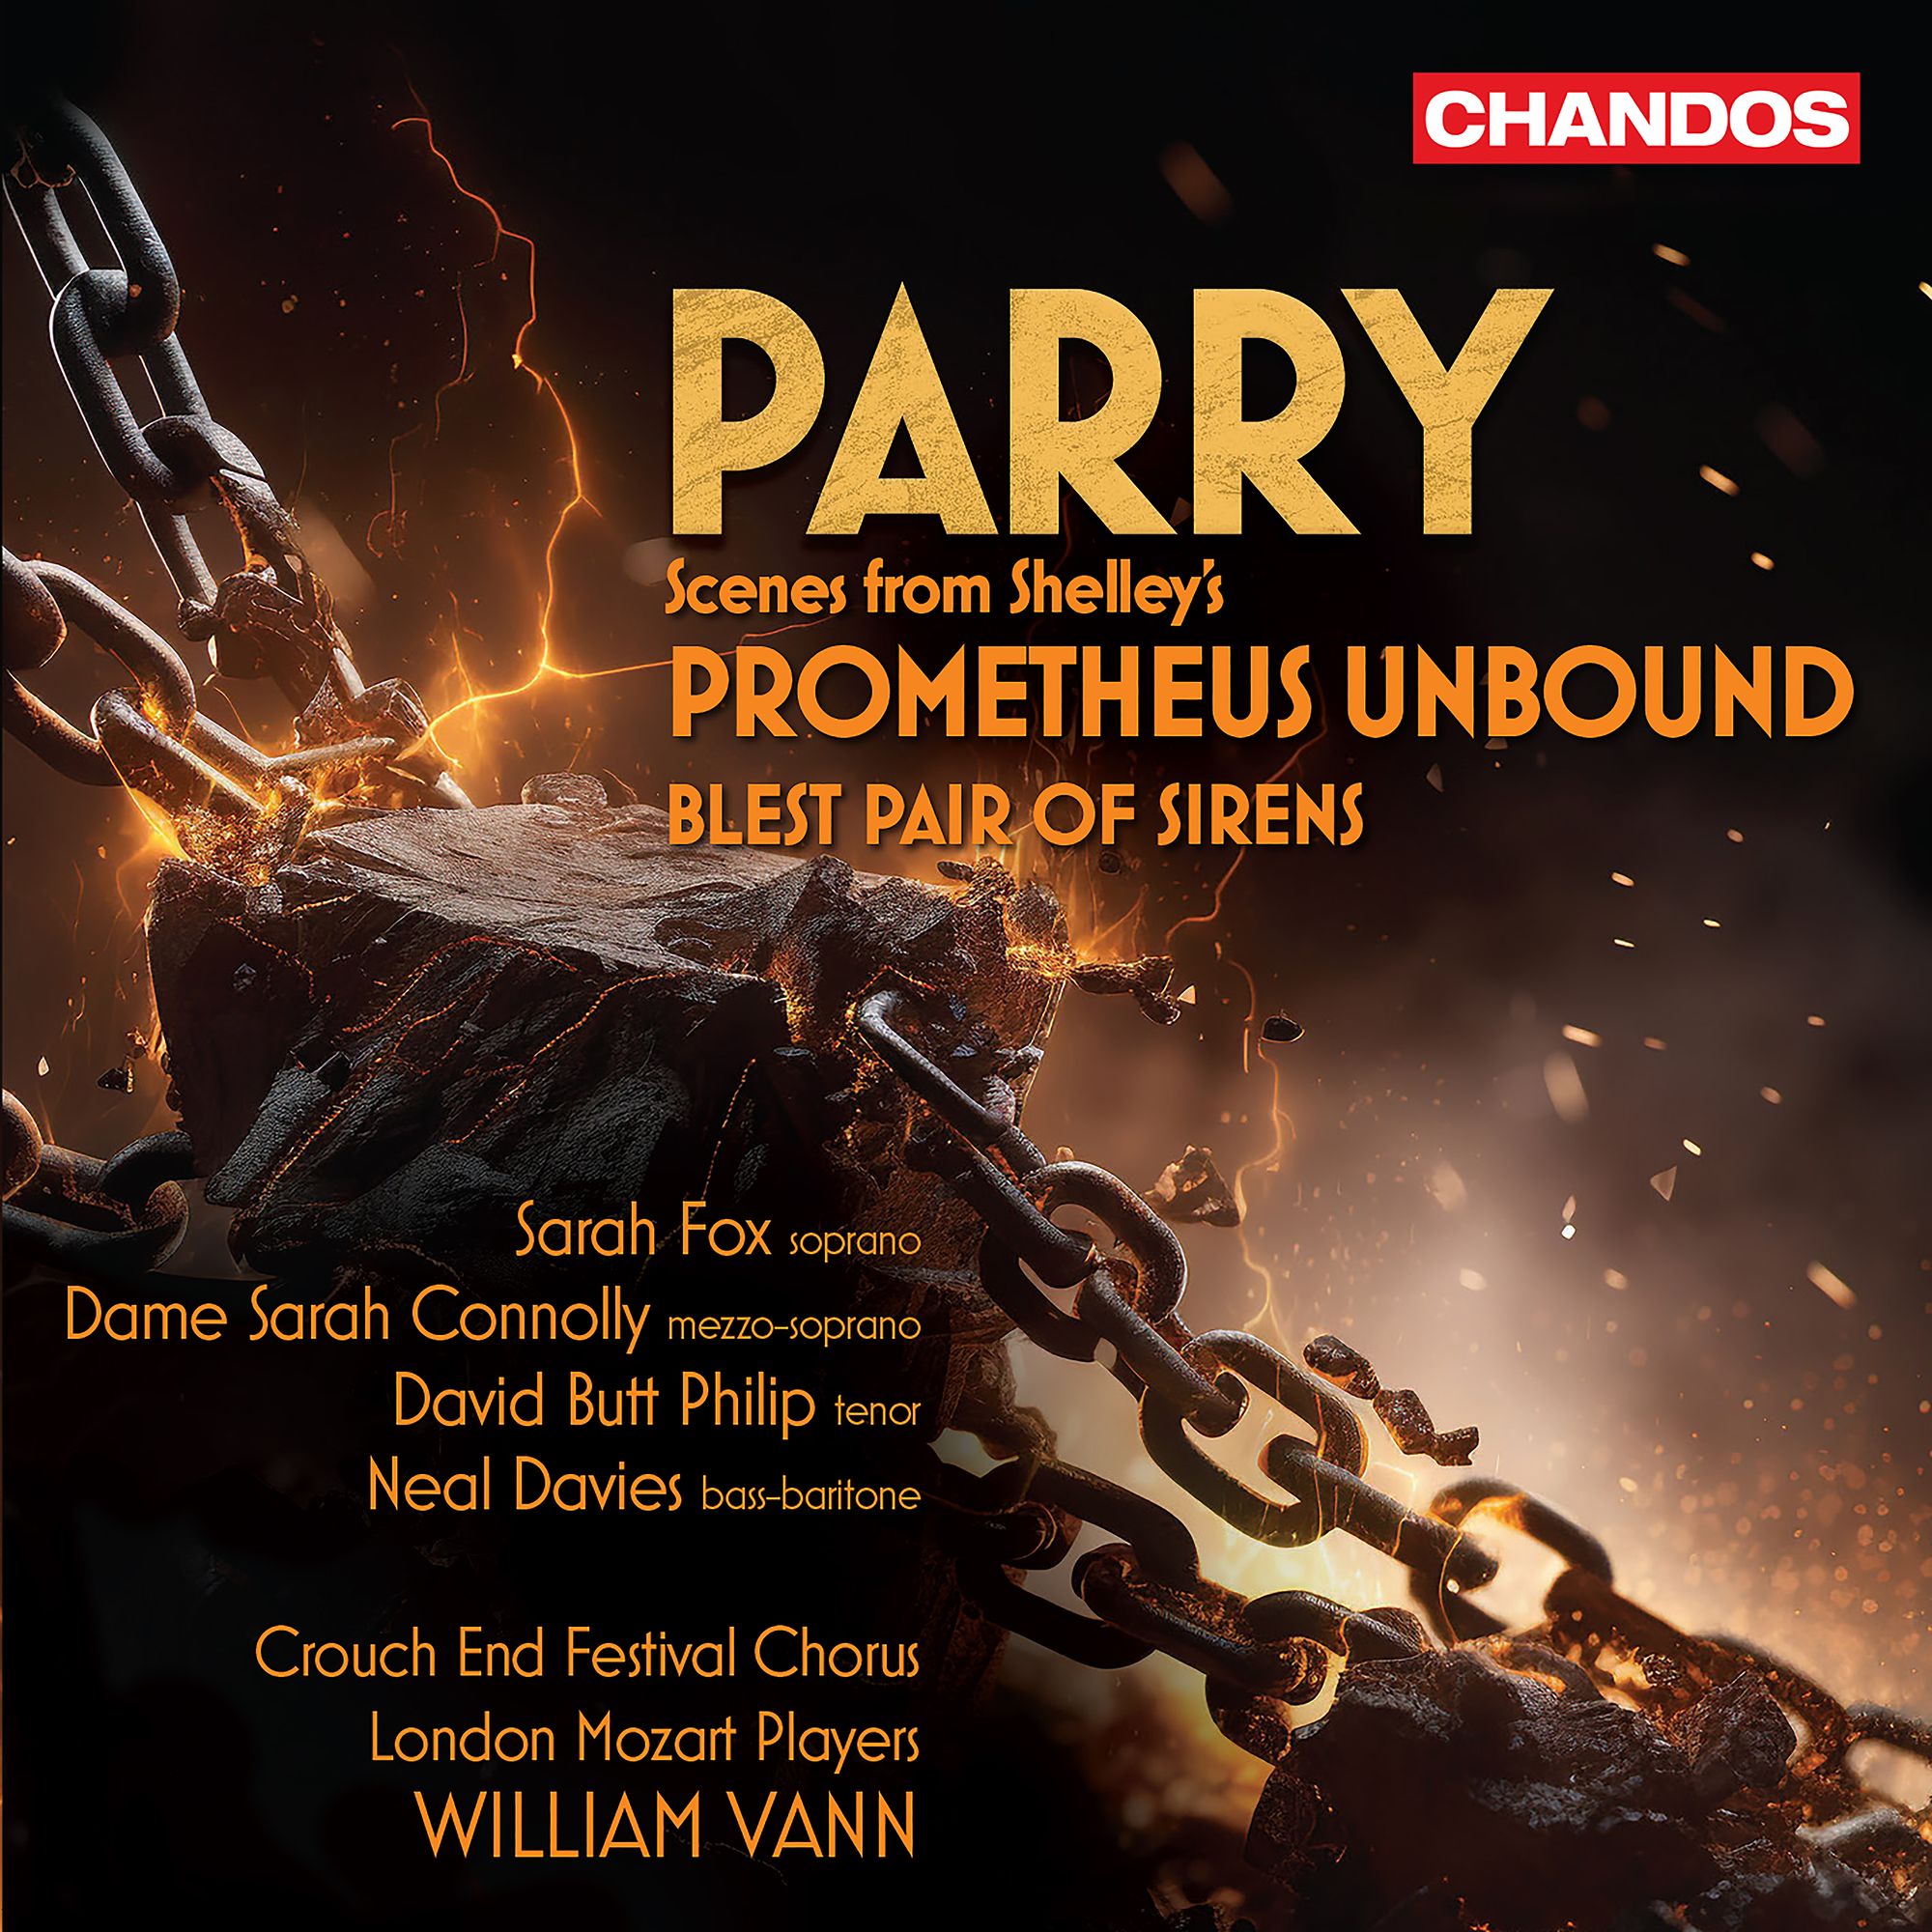 Prometheus Unbound: Parry on Chandos